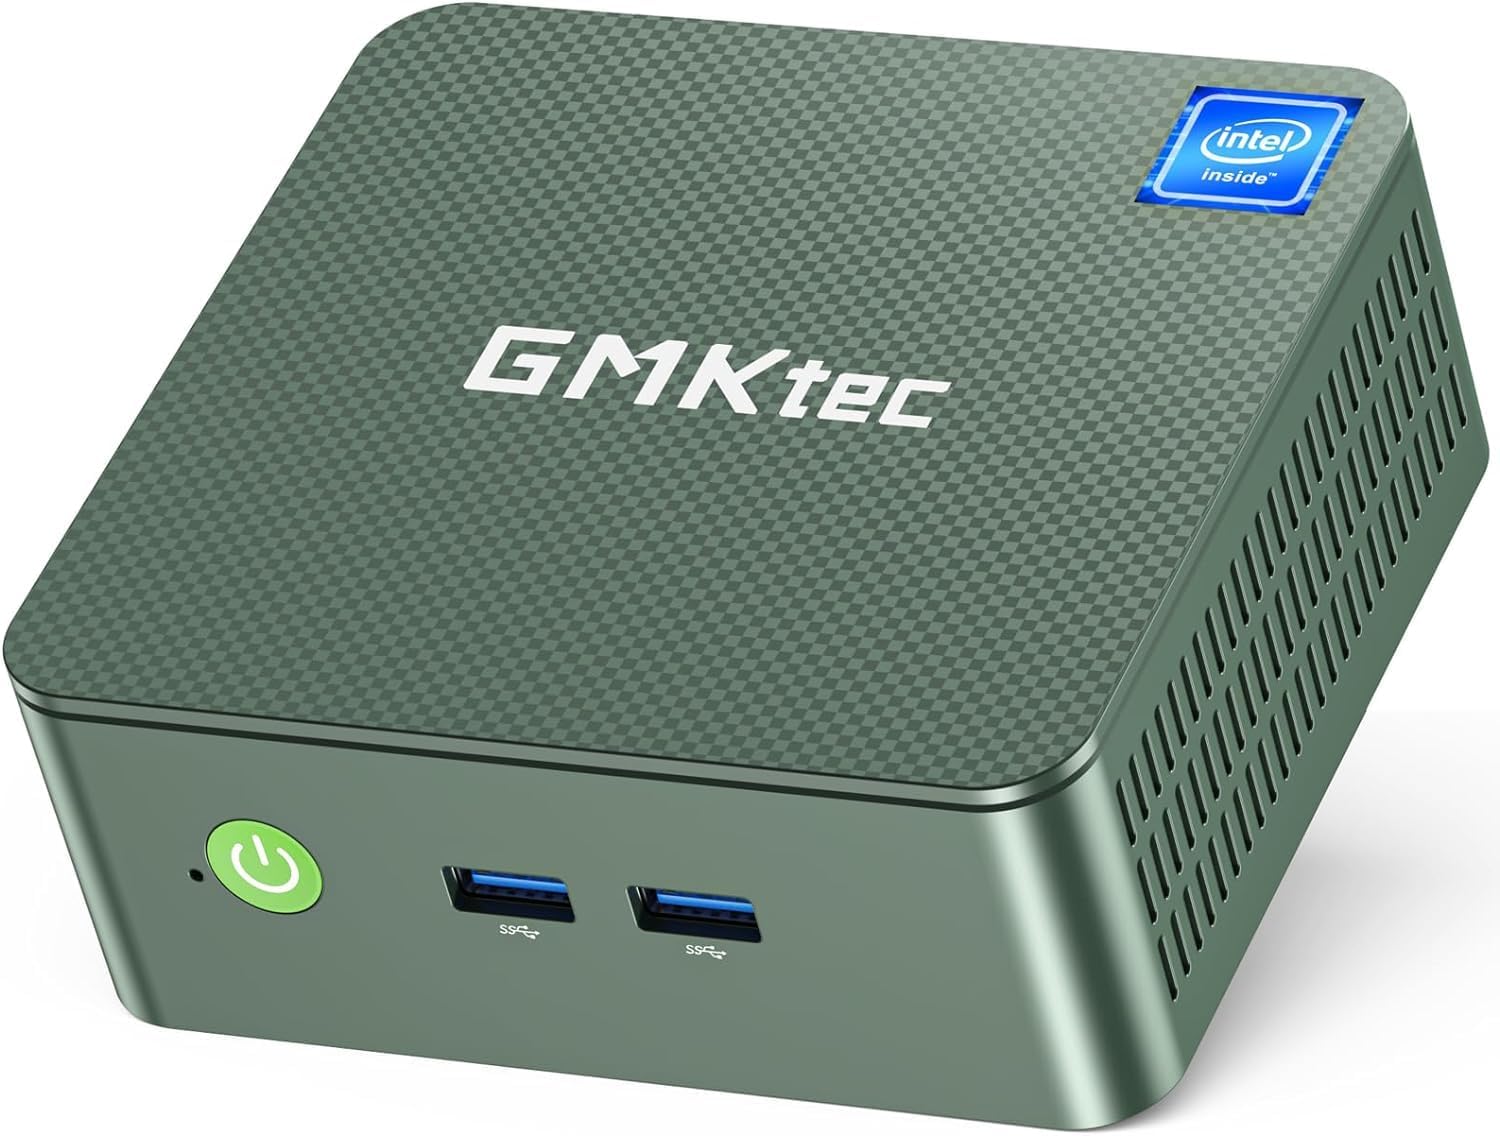 GMKtec Mini PC Intel Alder Lake N100 Windows 11 Pro (3.4GHz), Mini PC Windows 11 pro 8GB RAM/512GB M.2 SSD/4K UHD/WiFi 6,BT 5.2 Business Home Office Recreation